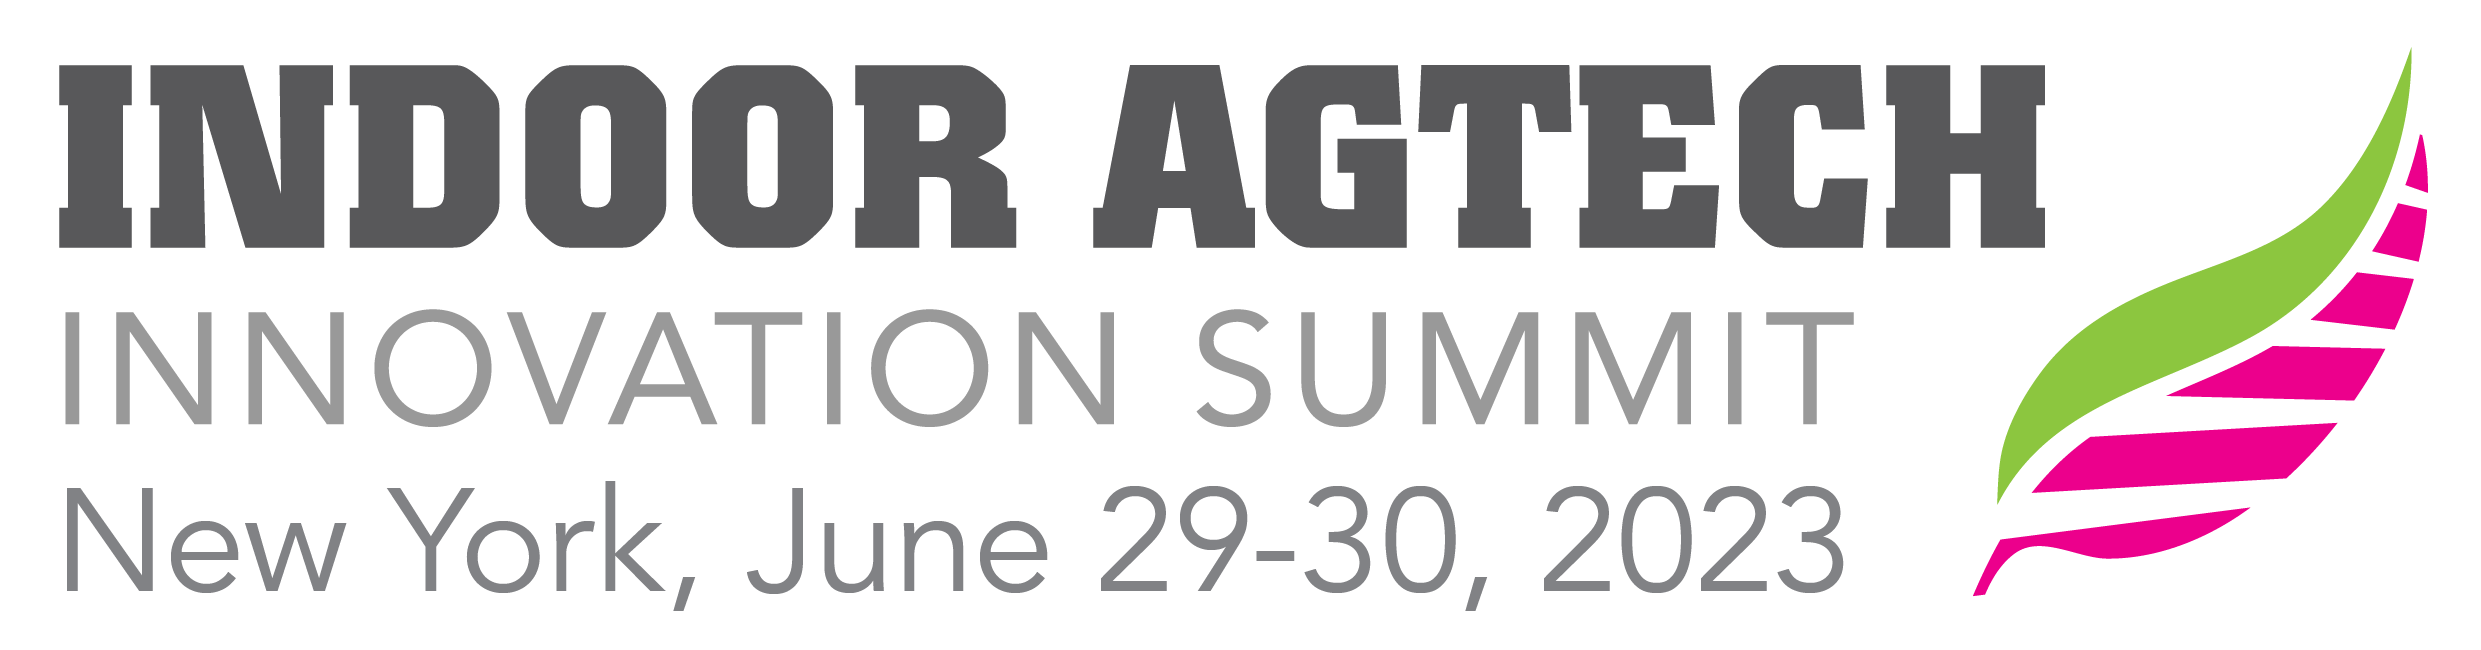 Indoor Agtech Innovation summit